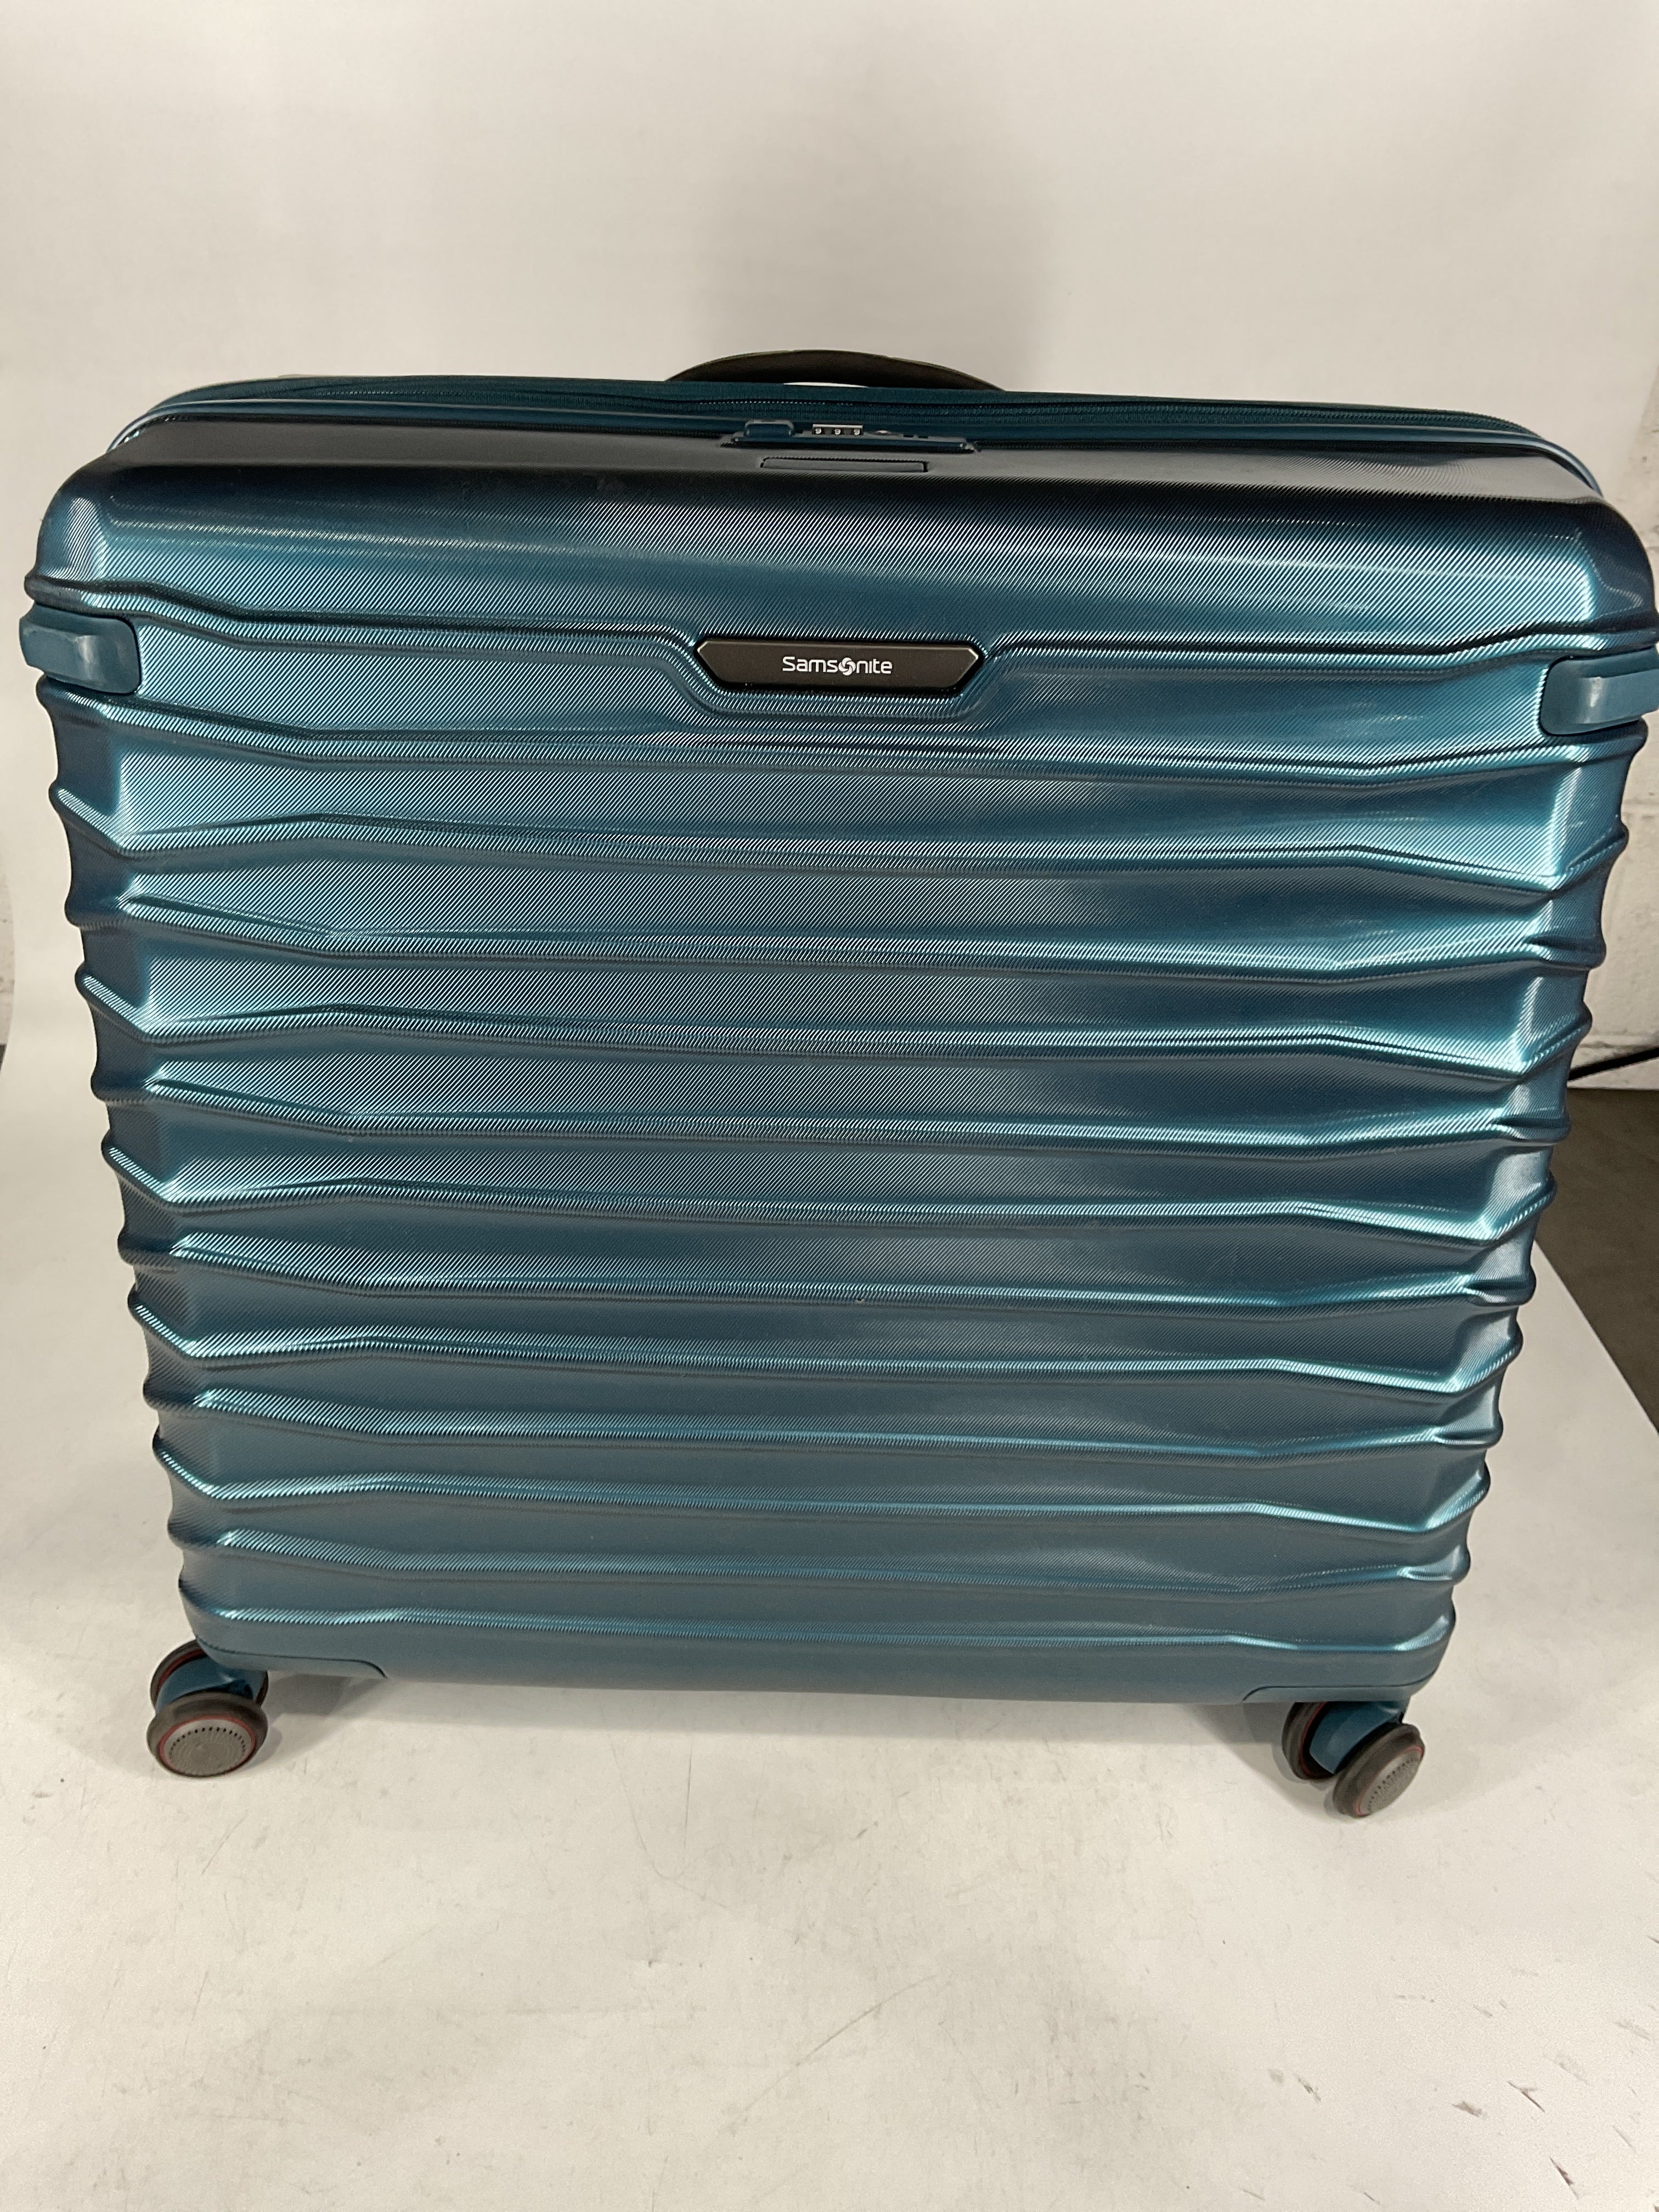 Samsonite Stryde 2 Hardside Expandable Luggage with Spinners U1